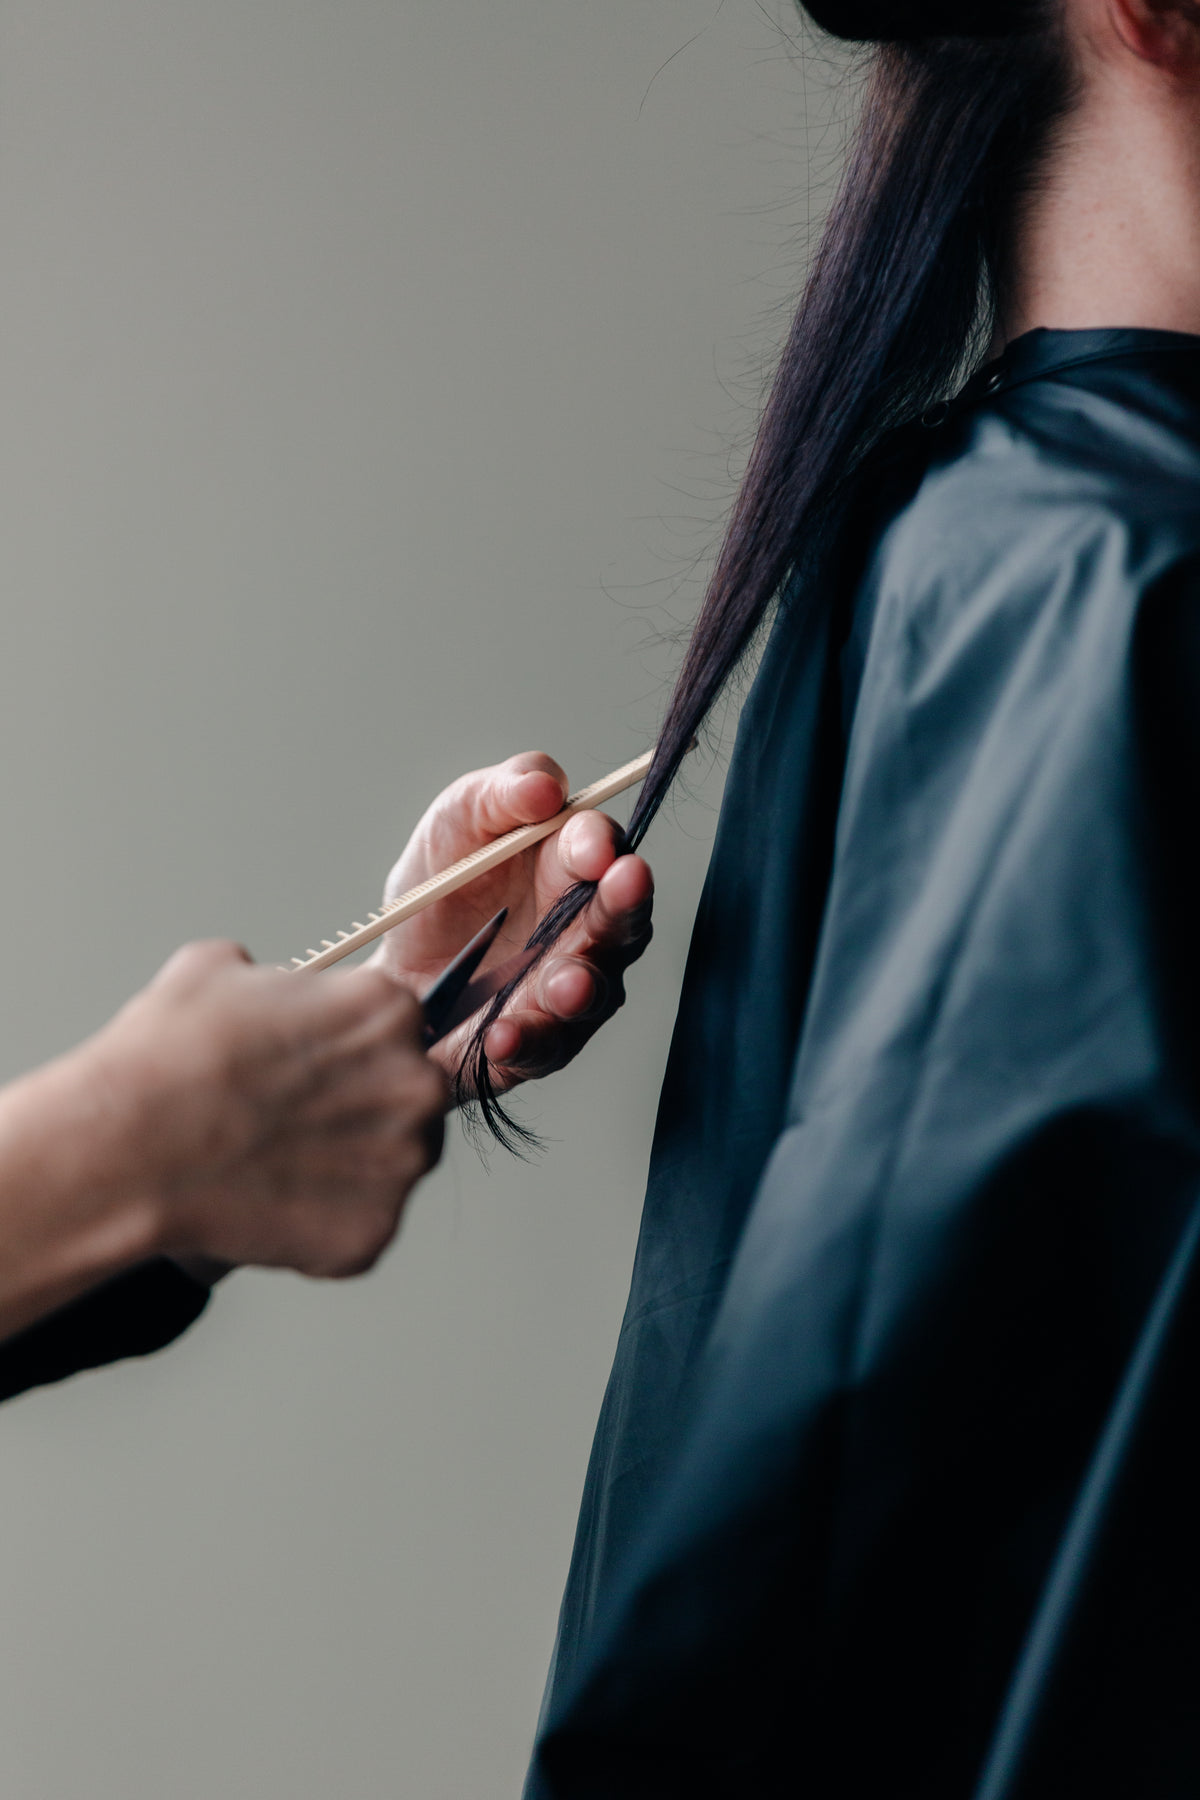 stylist cuts woman's long hair